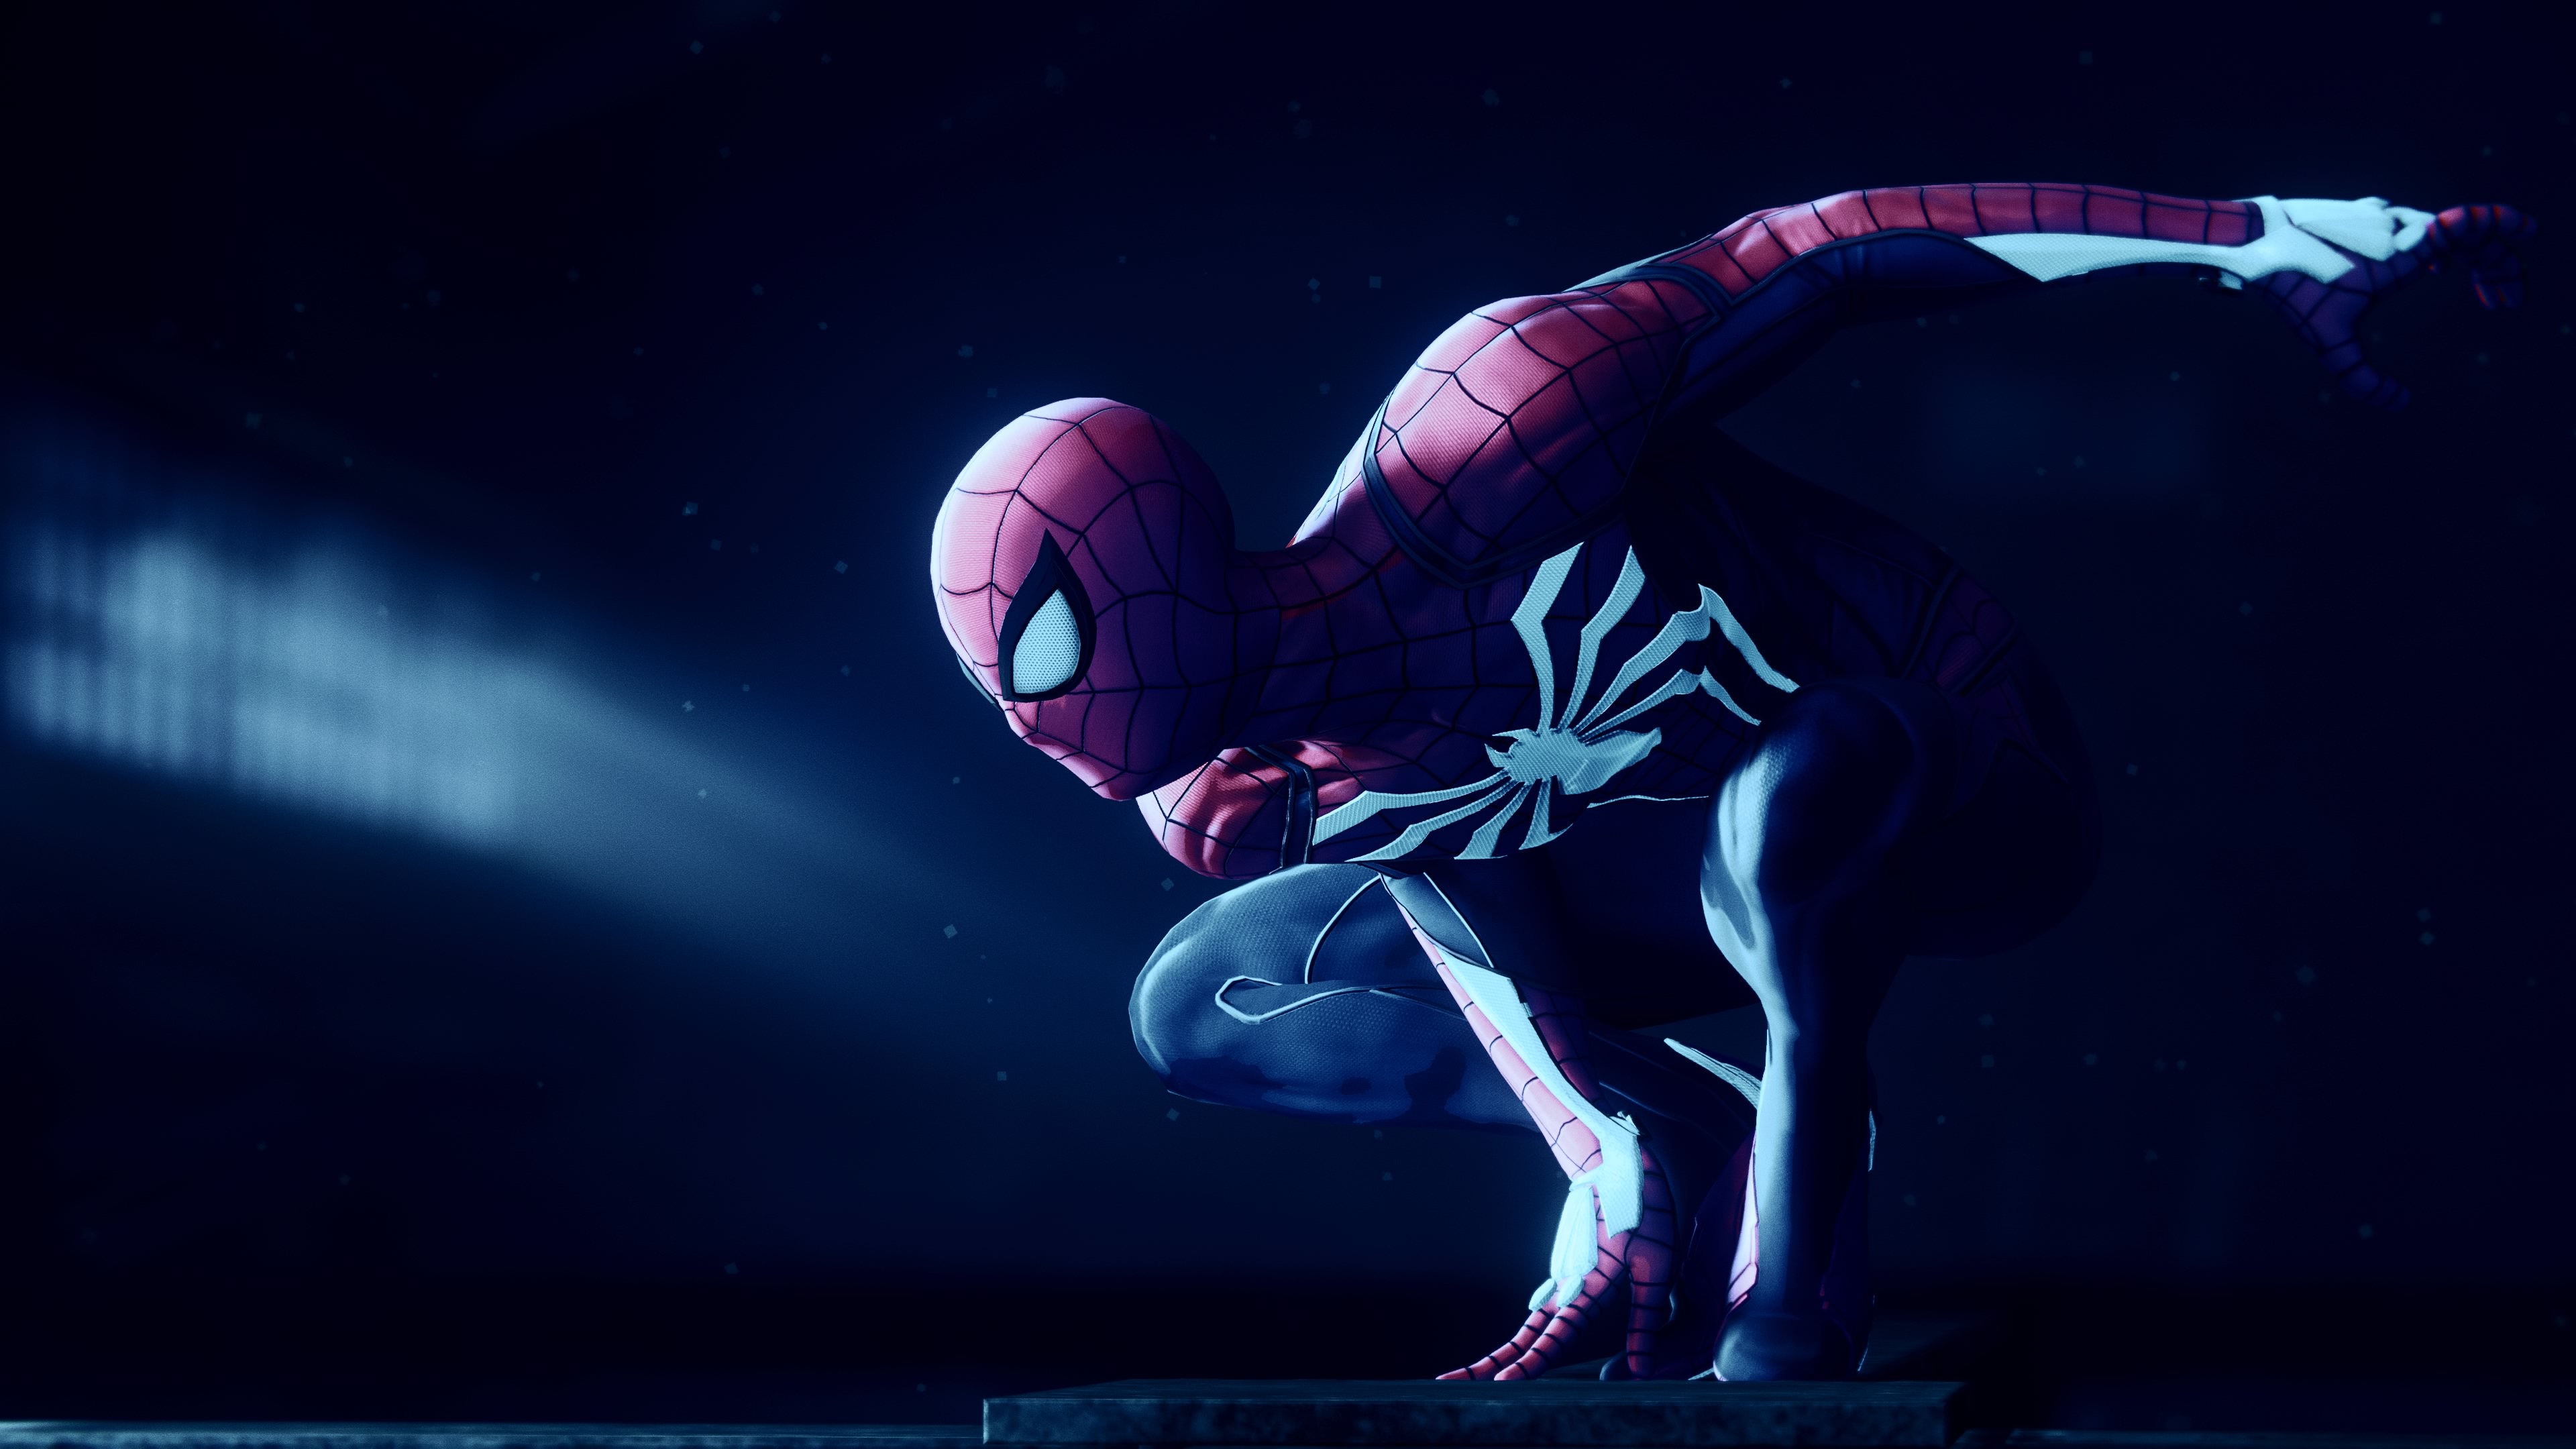 Marvel Spiderman Game 4k, HD Games, 4k Wallpapers, Images, Backgrounds